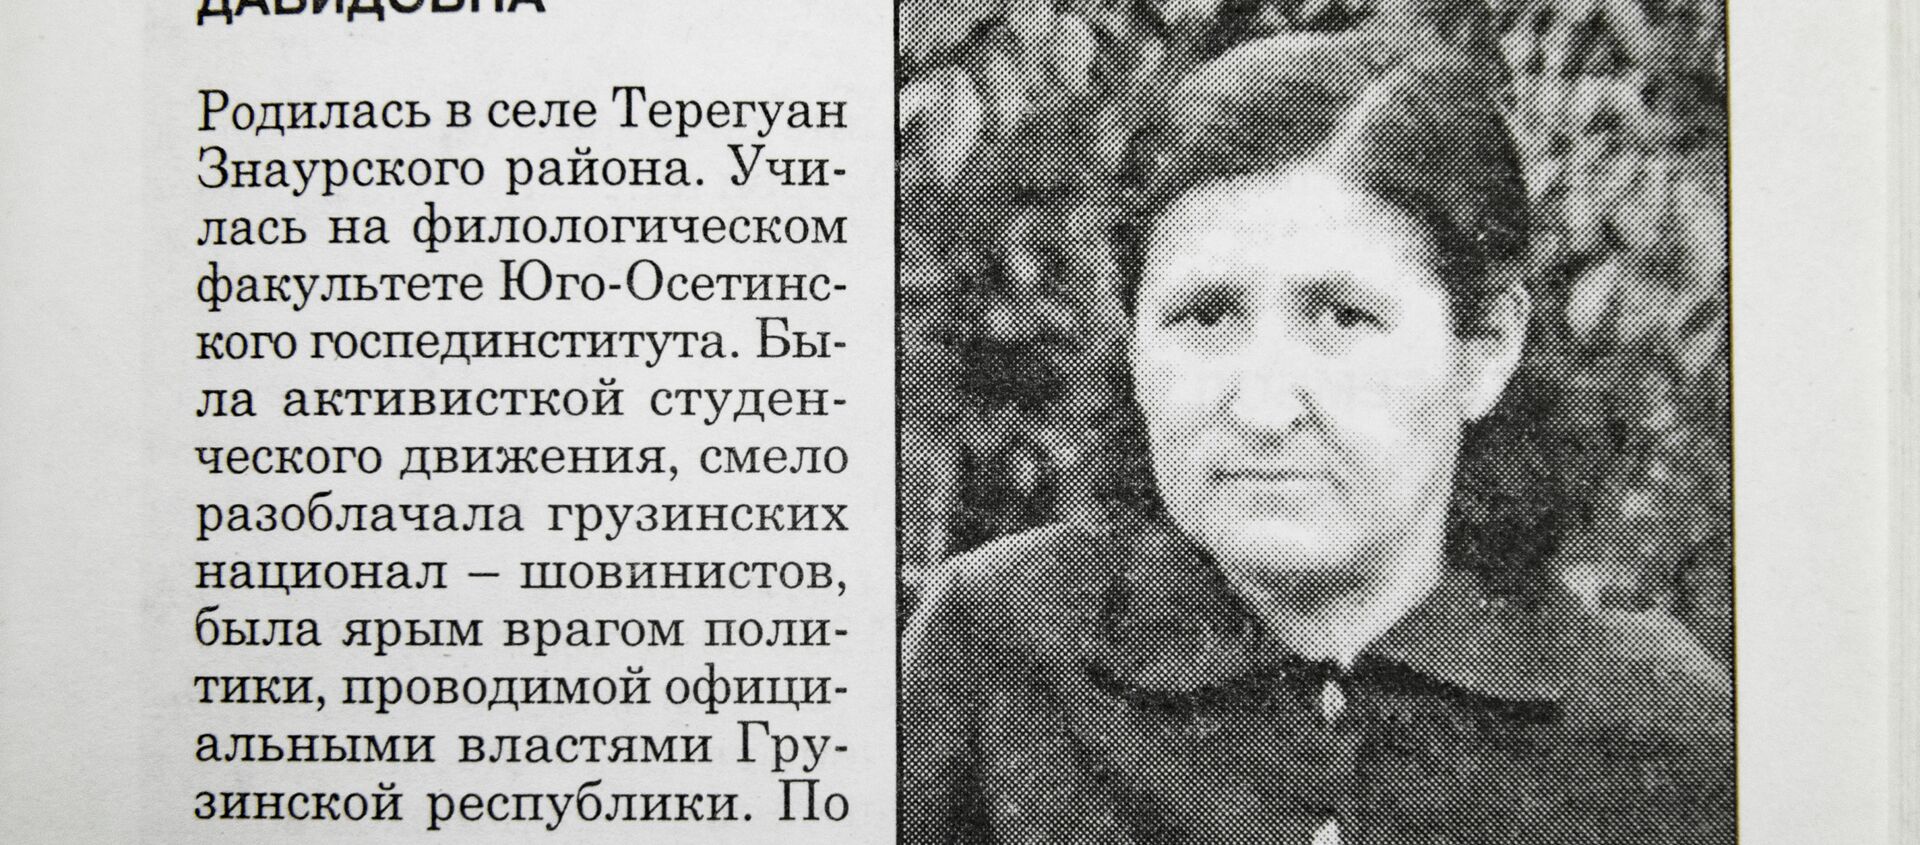 Джиоты Екатерина  - Sputnik Хуссар Ирыстон, 1920, 22.04.2021